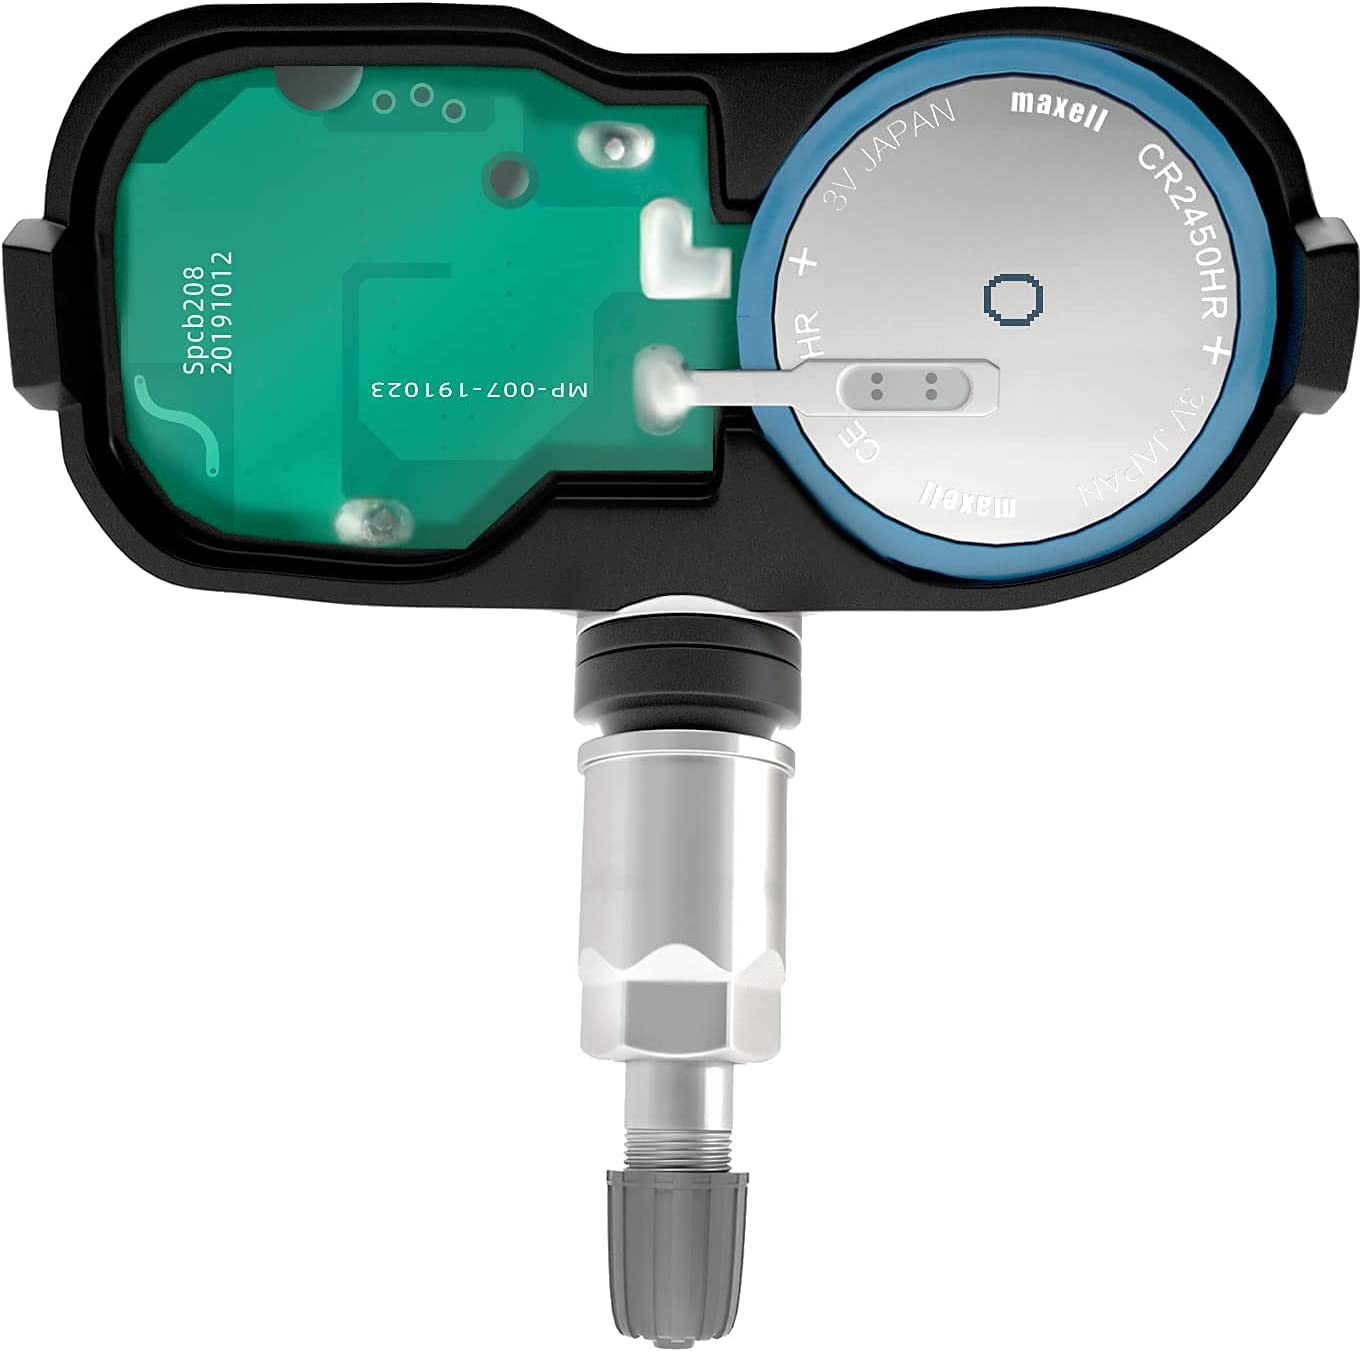  Marsflex TPMS Sensor Compatible for Toyota Scion Pontiac Lexus,  Camry rav4 Scion Yaris Corolla Tire Pressure Monitoring Sensor Replaces#  42607-33011 PMV-107J 42607-33021 42607-06011 315MHz : Automotive